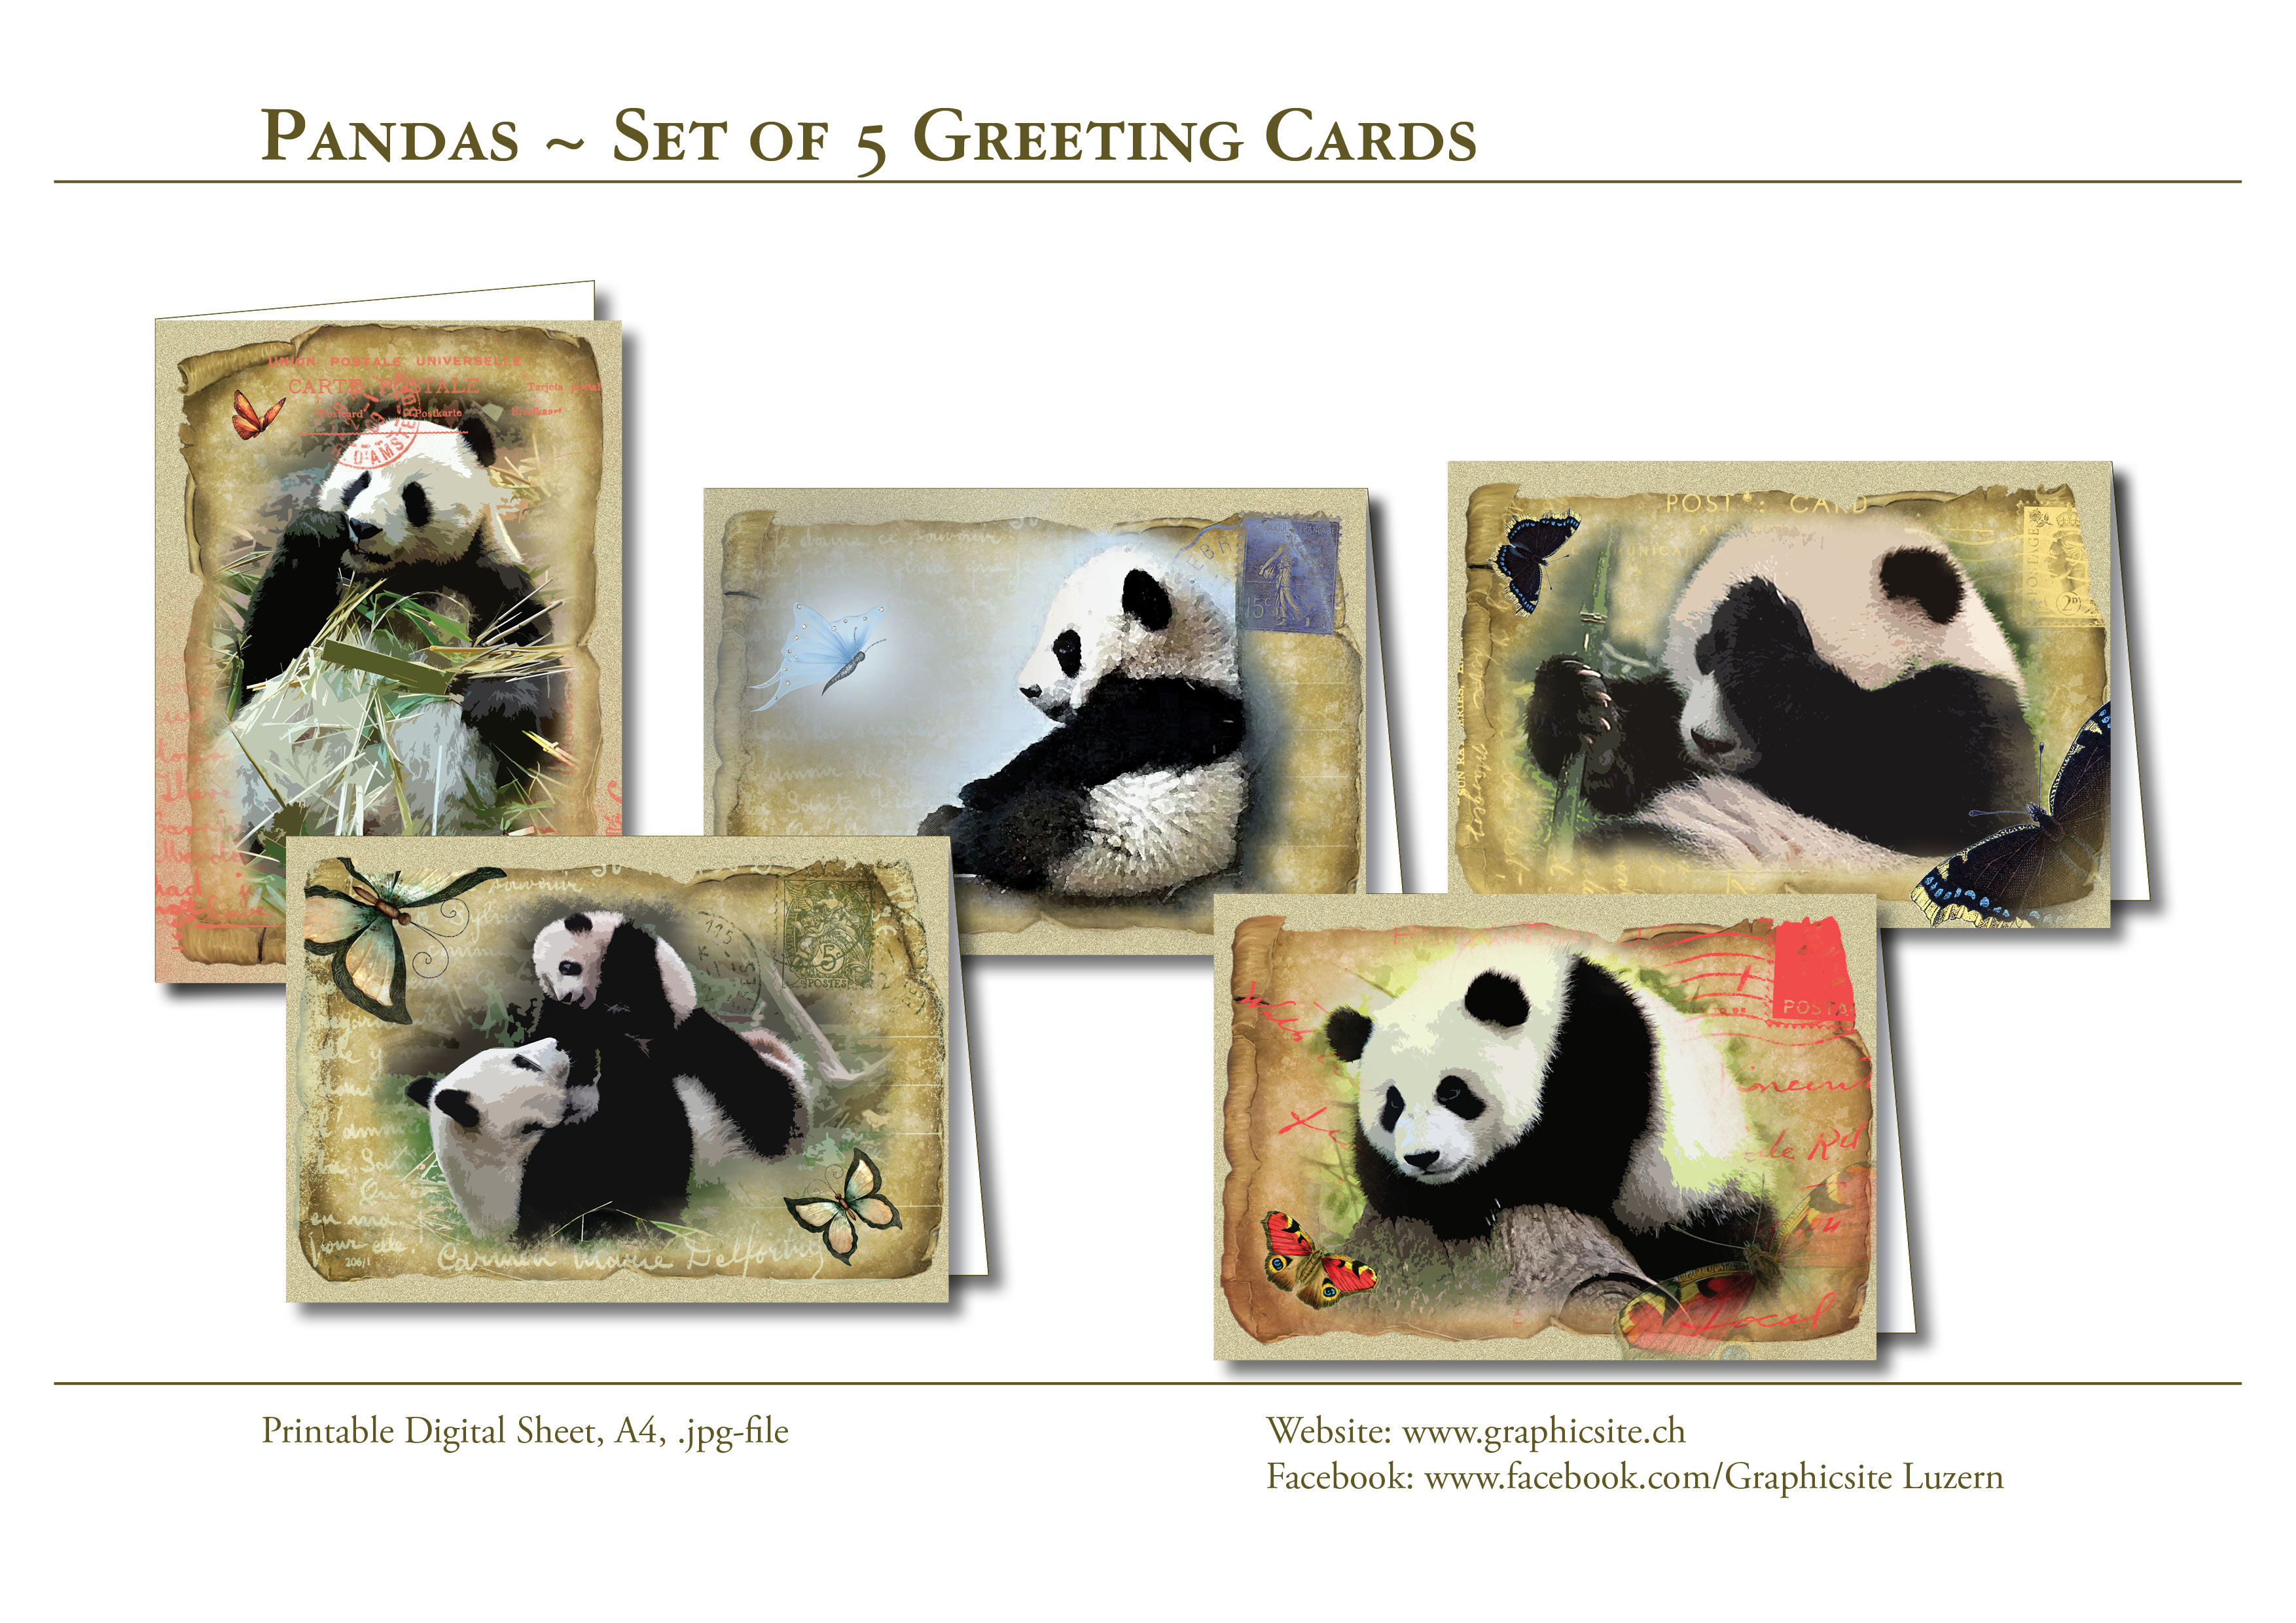 Karten selber drucken - DIN A-Formate - Pandas - Grusskarten, #pandas, #grusskarten, #tiere, #papeterie, #grafiker, #luzern,